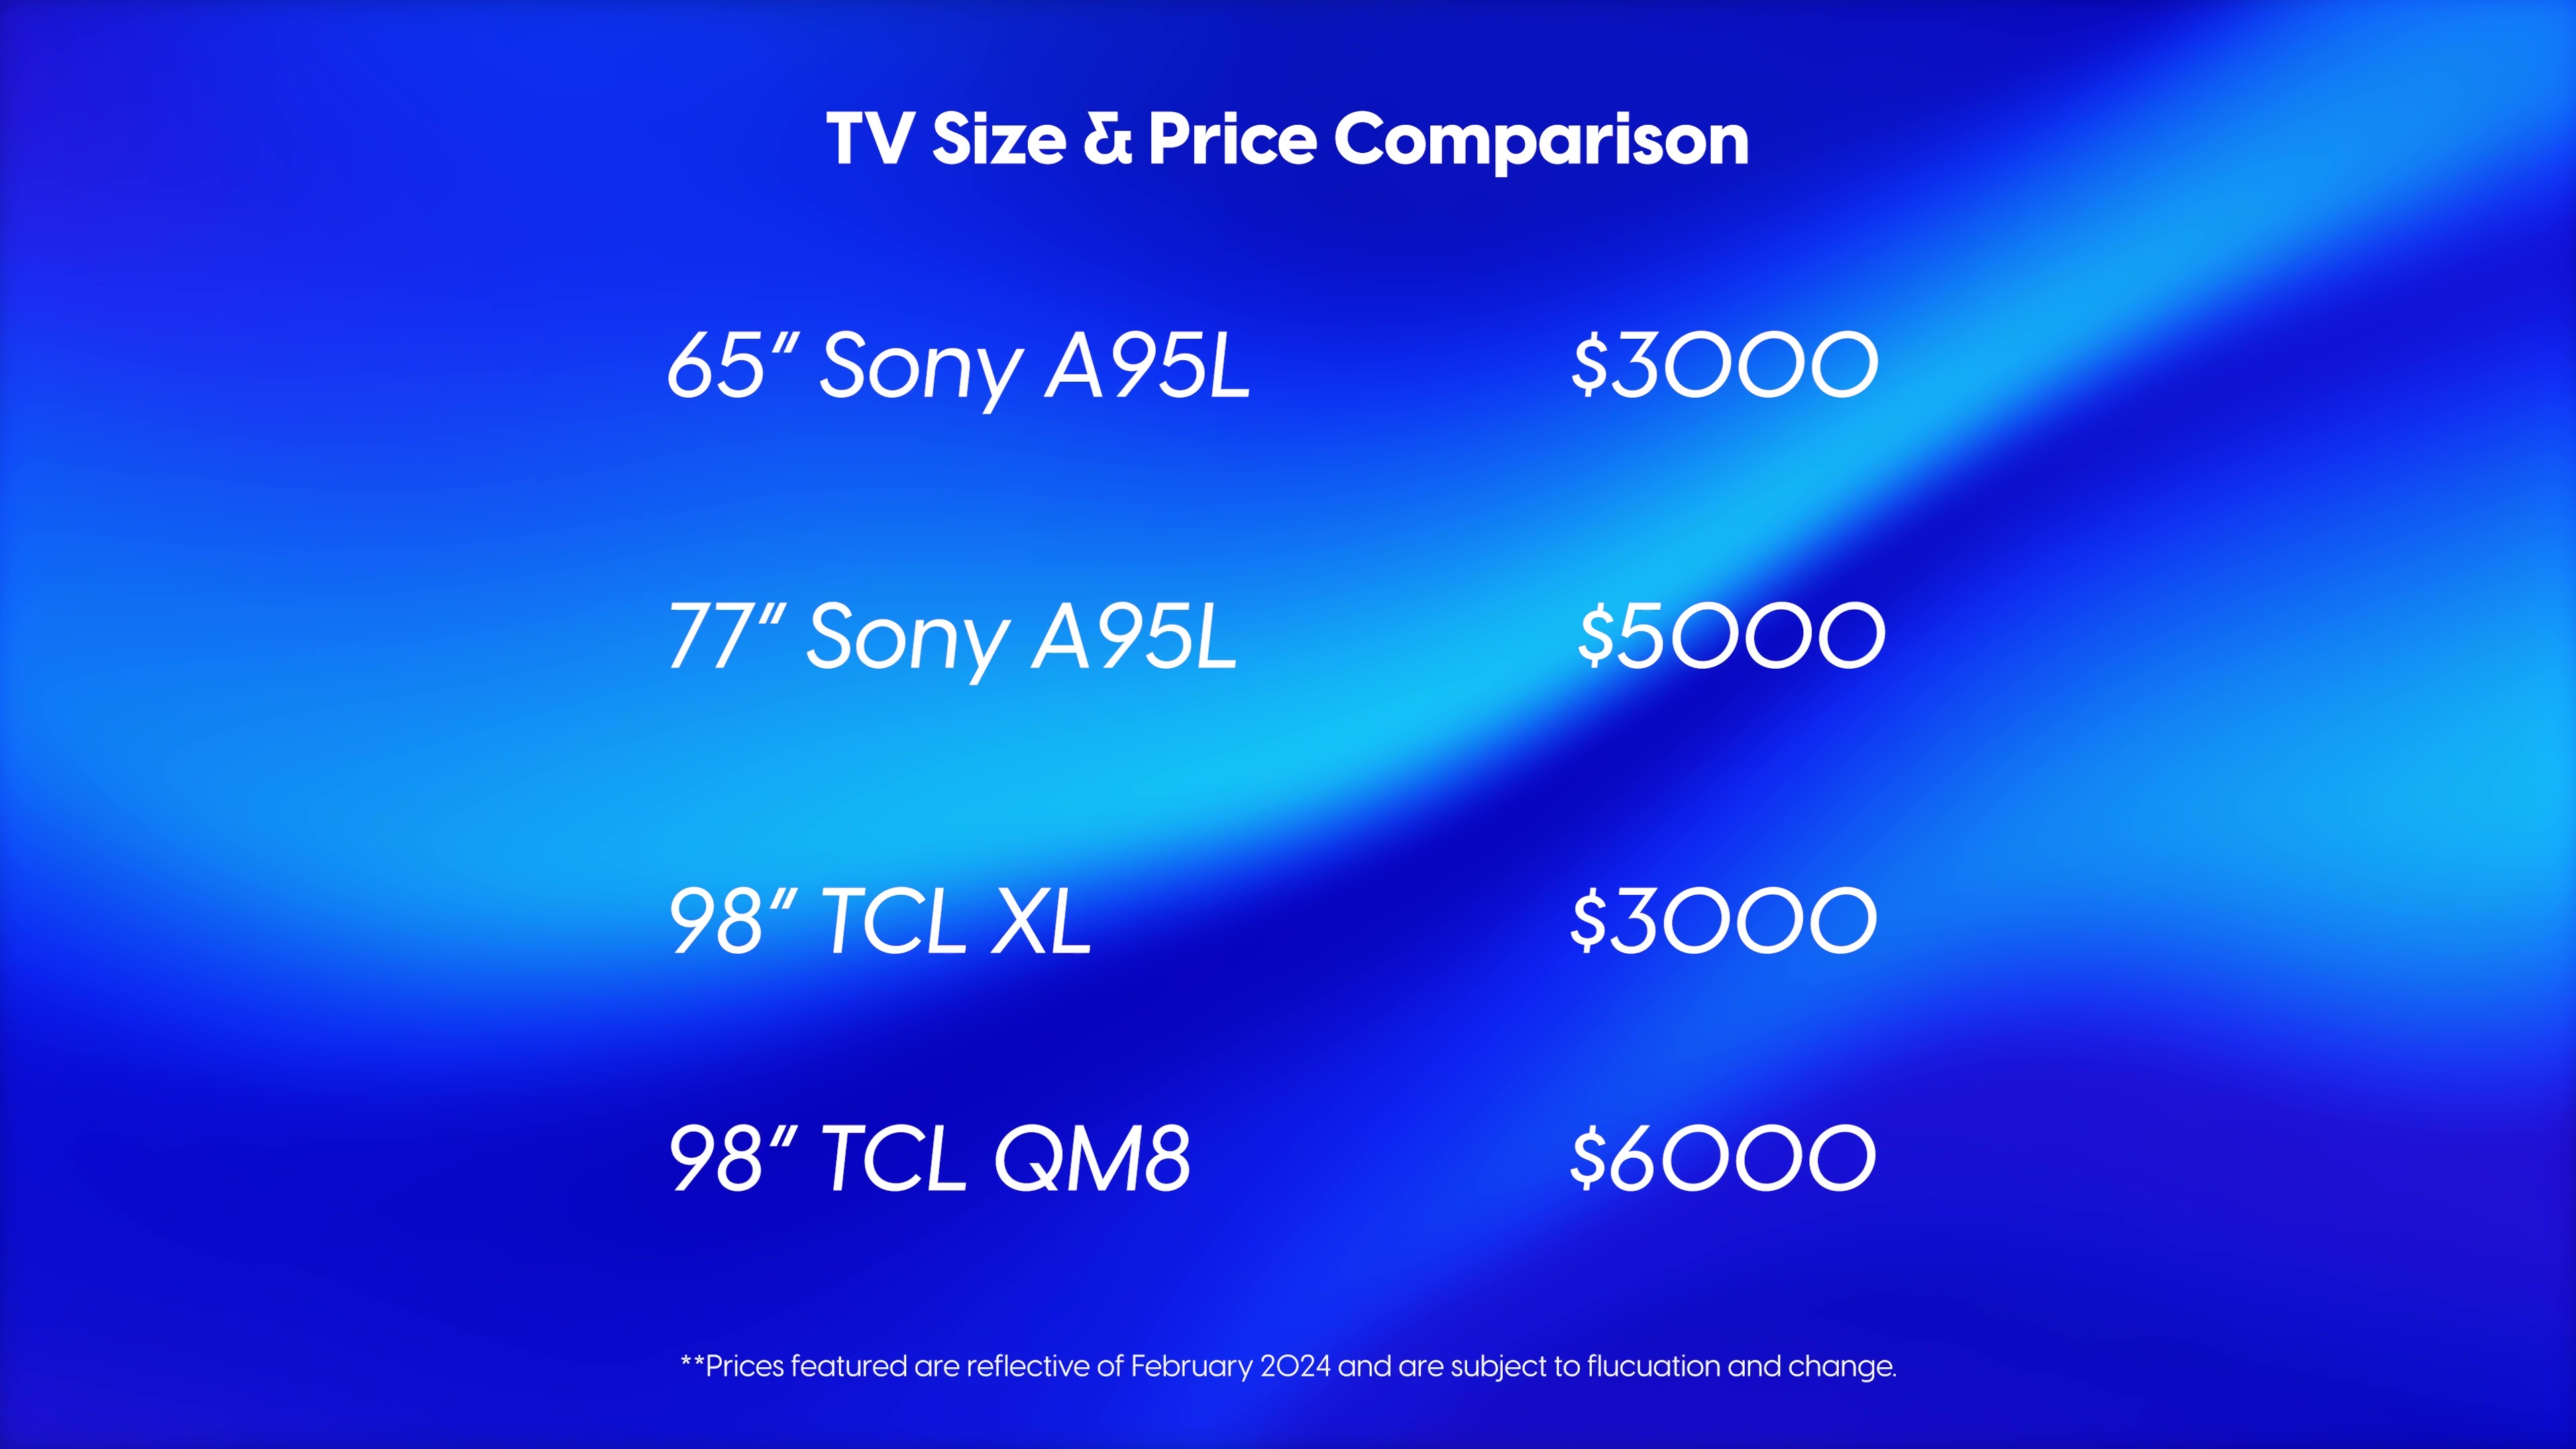 Best TV vs Biggest: Sony A95L & TCL QM8